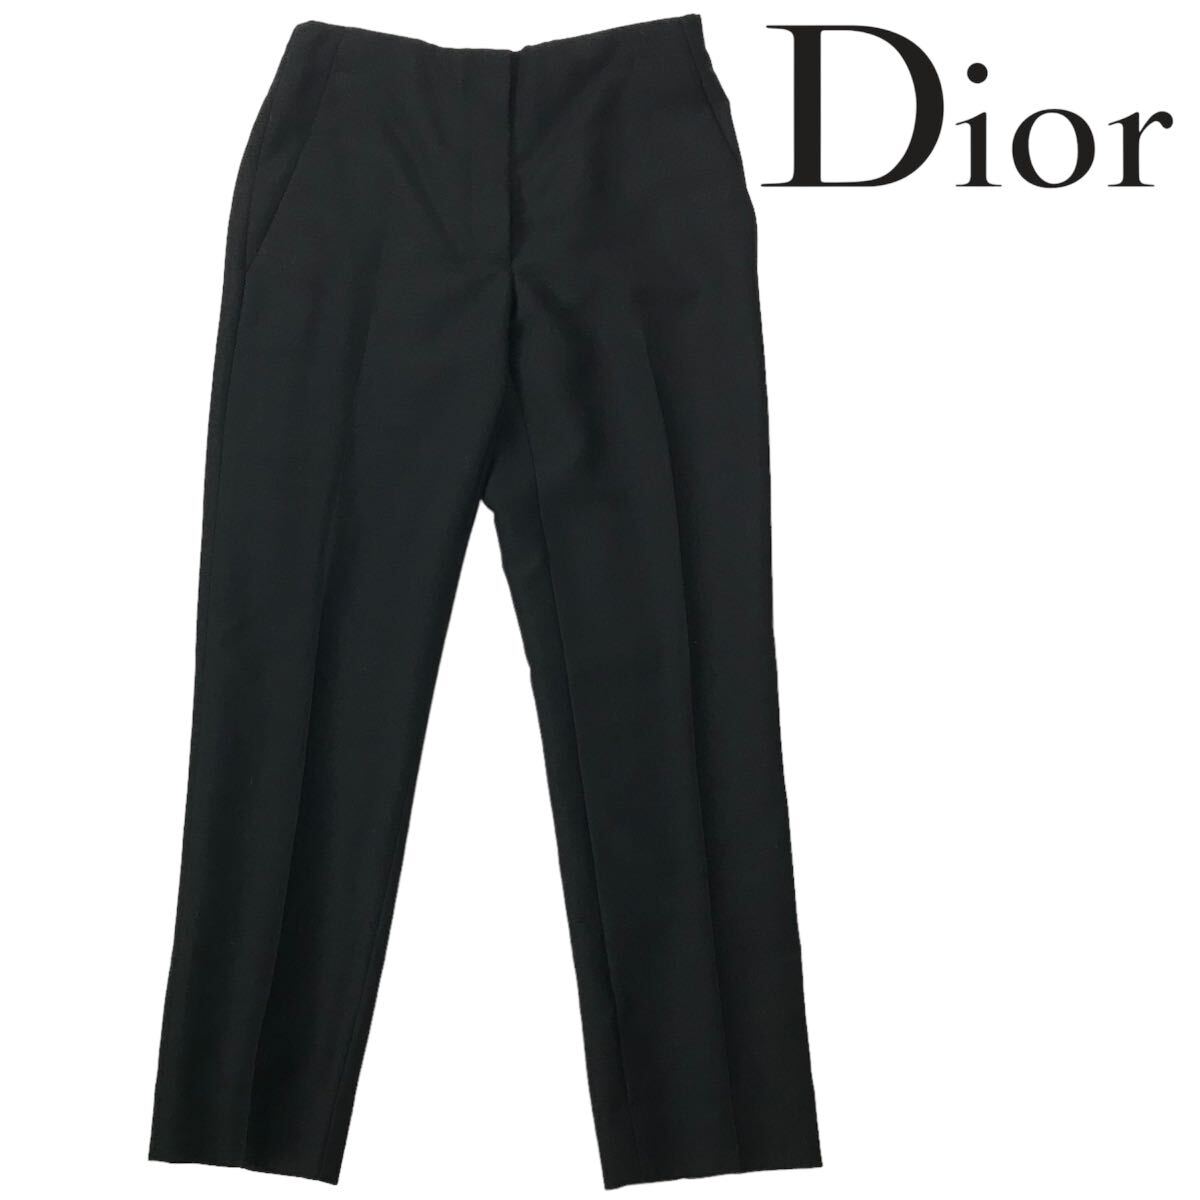 h231 Christian Dior Dior pants slacks formal business center Press cropped pants black 38 regular goods mo hair wool 